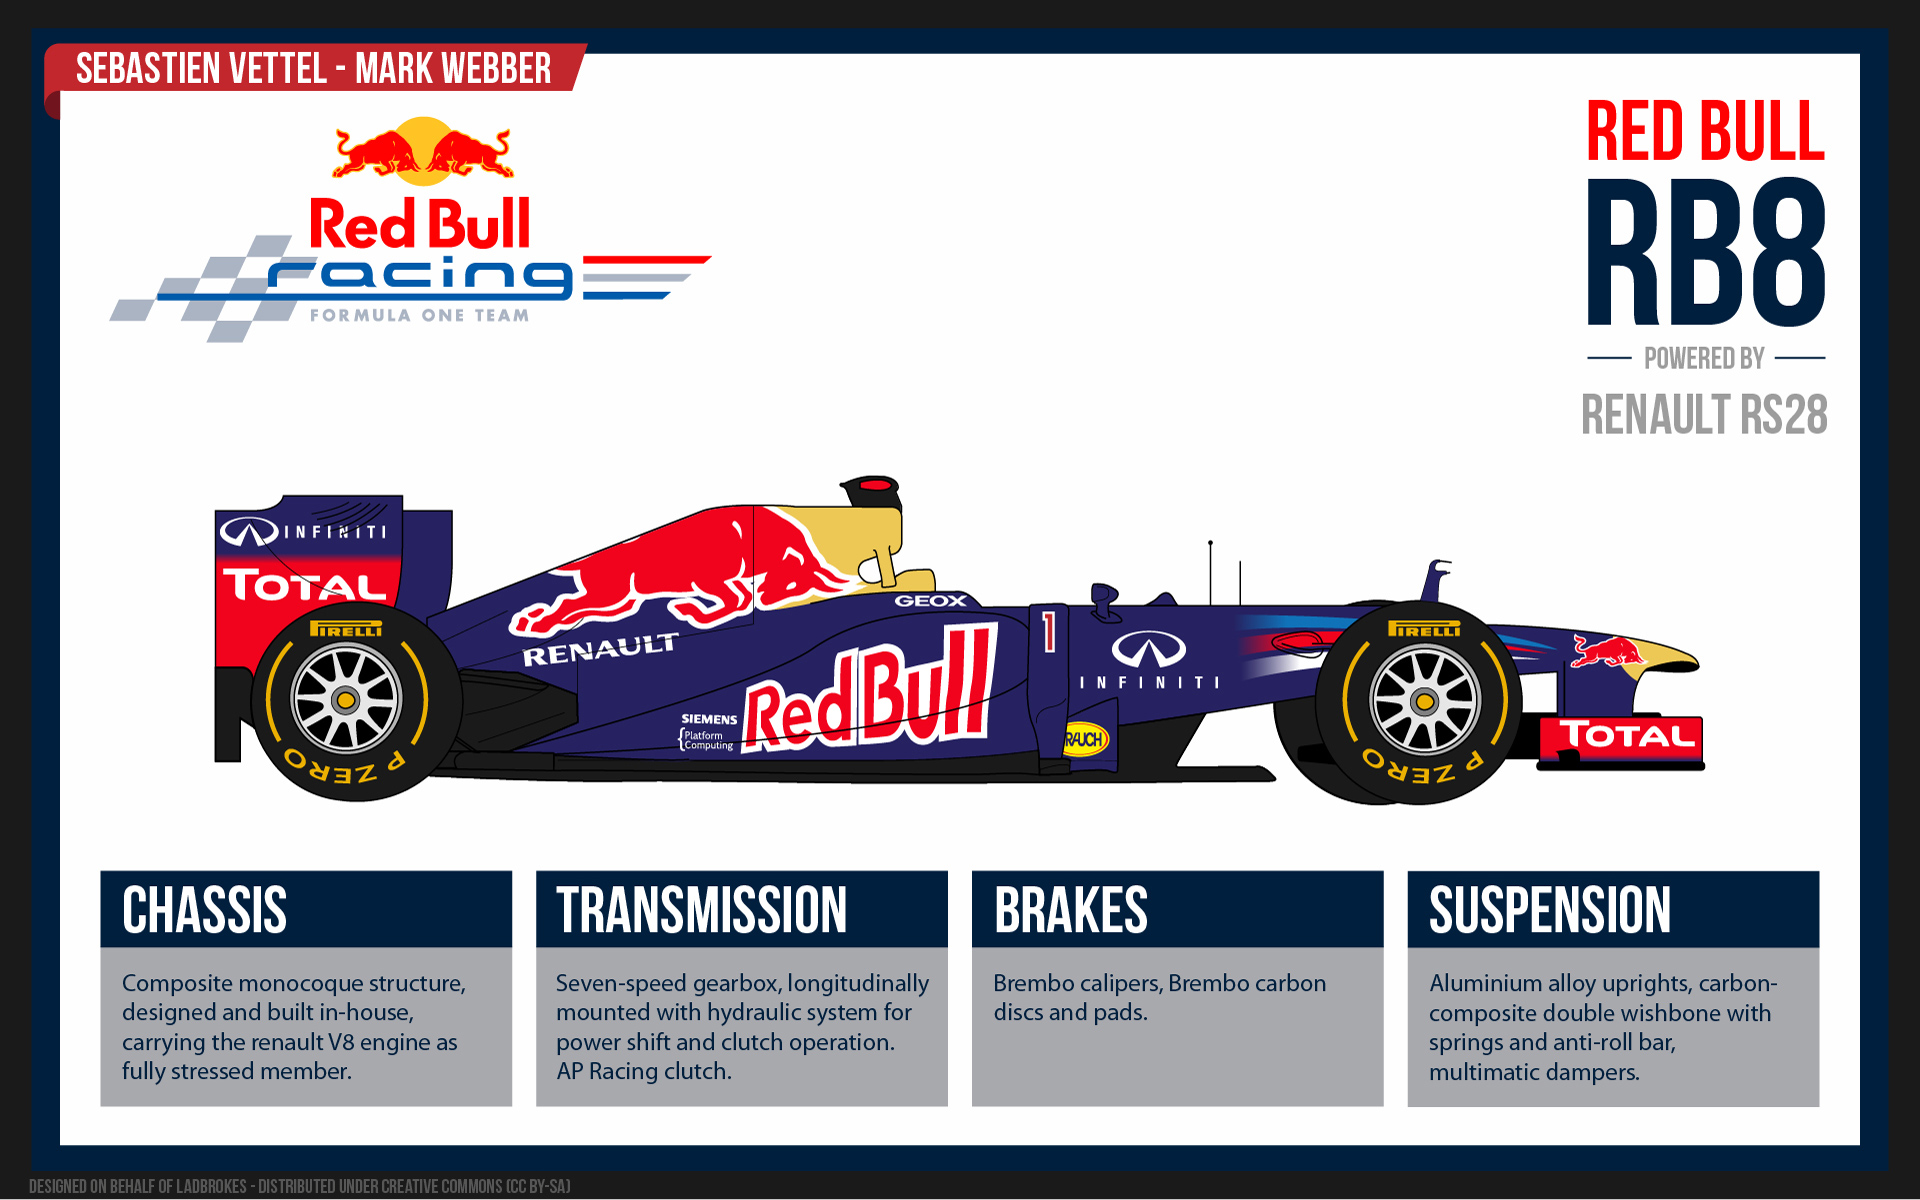 Desktop Wallpaper Of F1 Red Bull Racing Sebastien Vettel And Mark